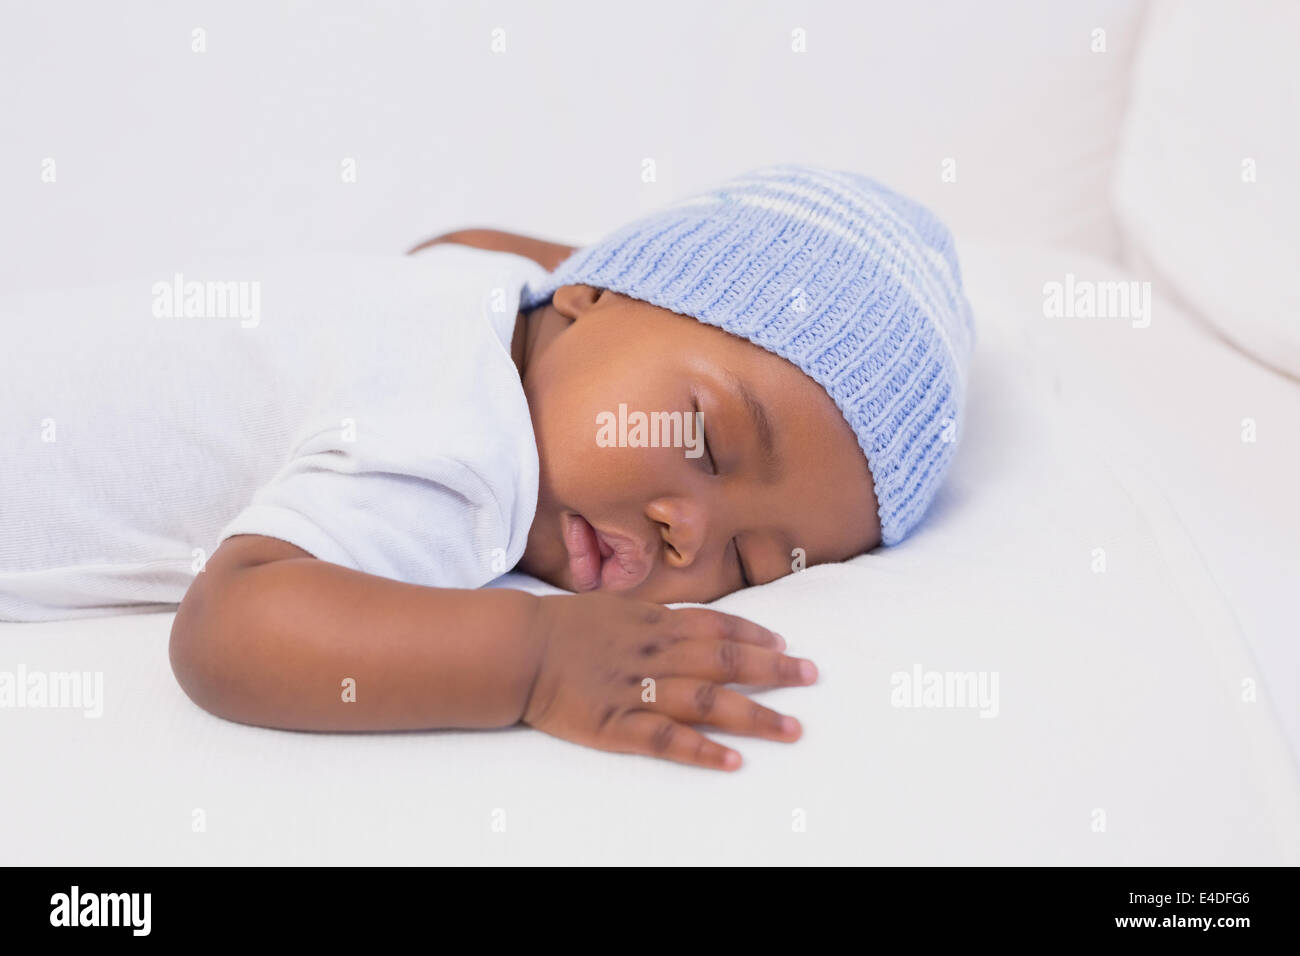 Adorable baby boy sleeping peacefully Stock Photo